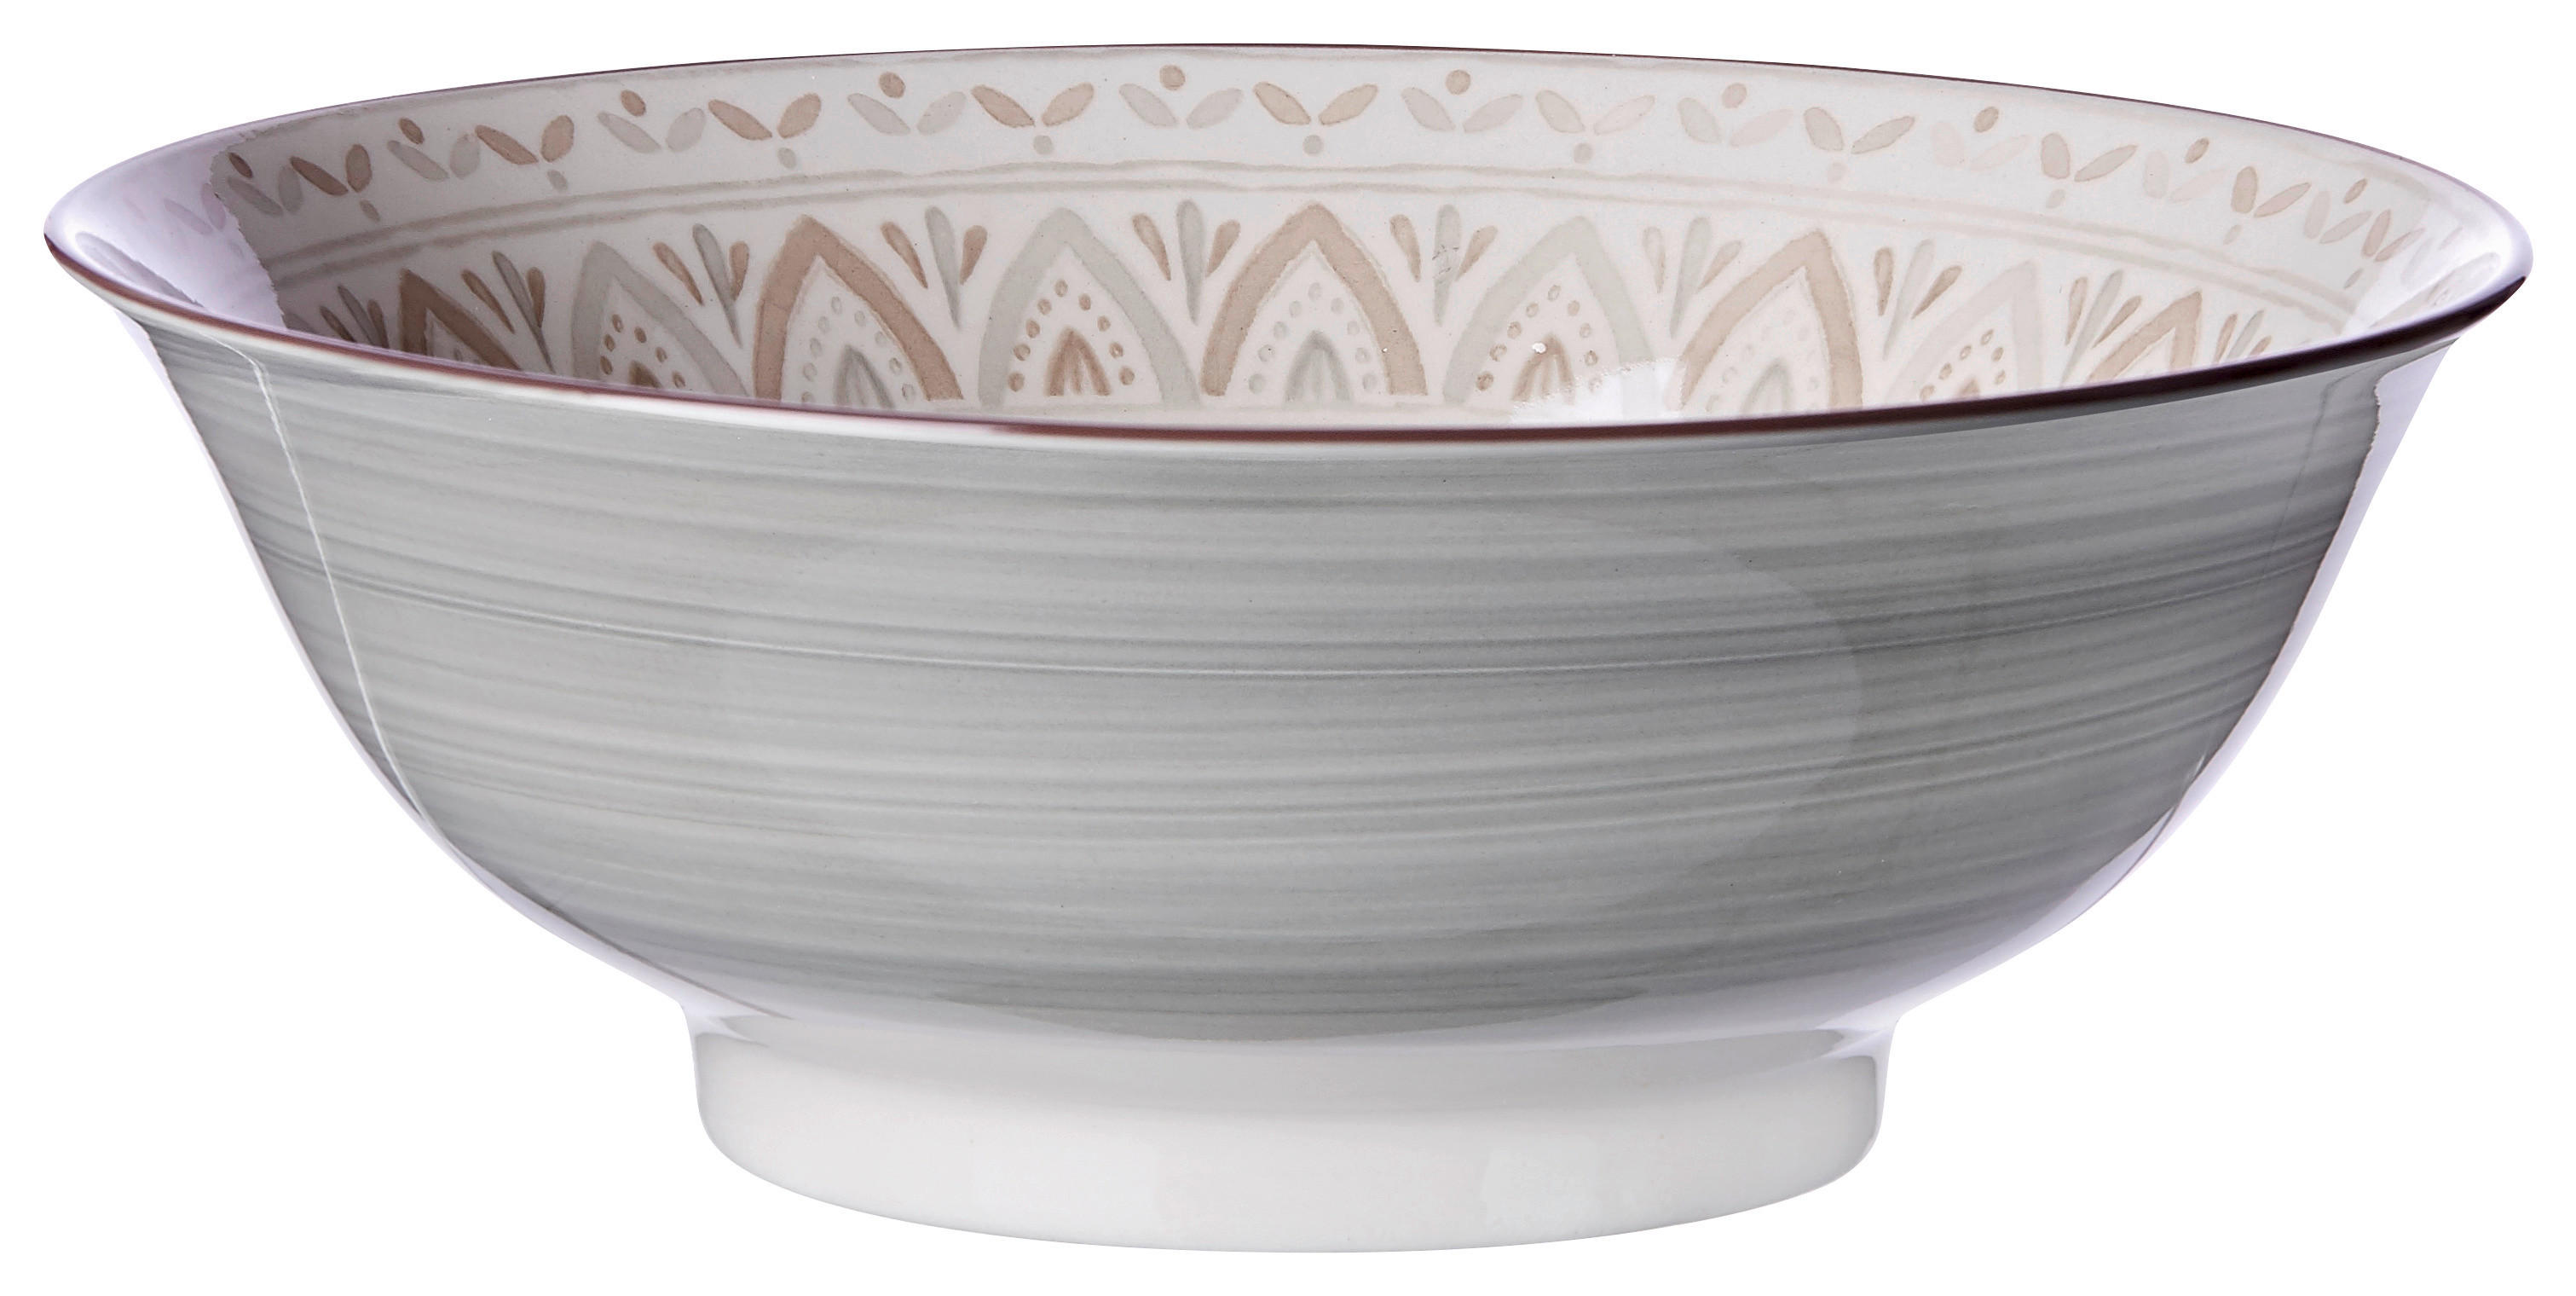 SALATSCHÜSSEL Porzellan Keramik  - Creme/Braun, KONVENTIONELL, Keramik (21cm) - Ritzenhoff Breker